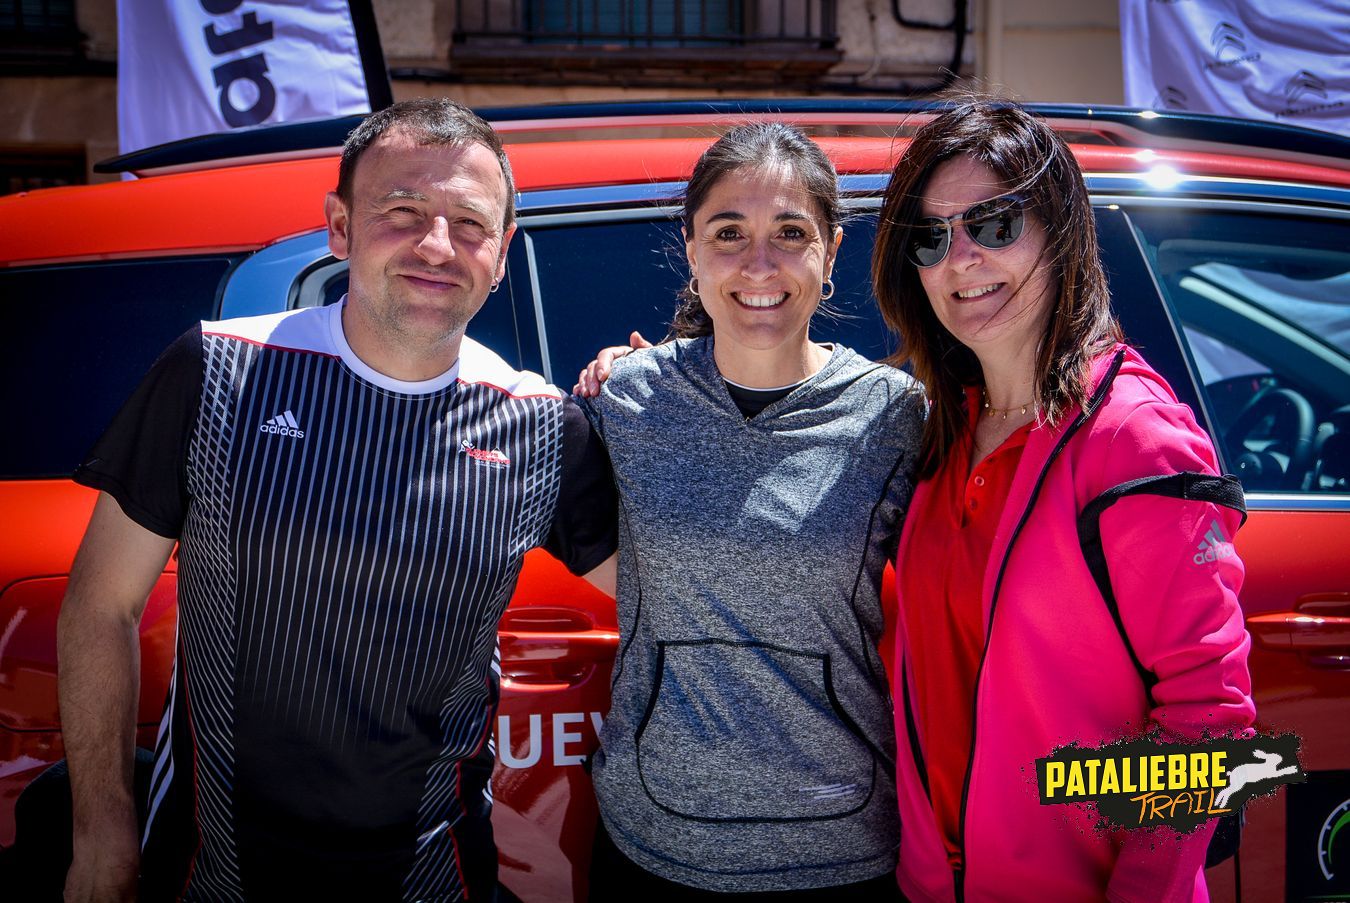 Pataliebre 2019 - Carrera Corta 17K